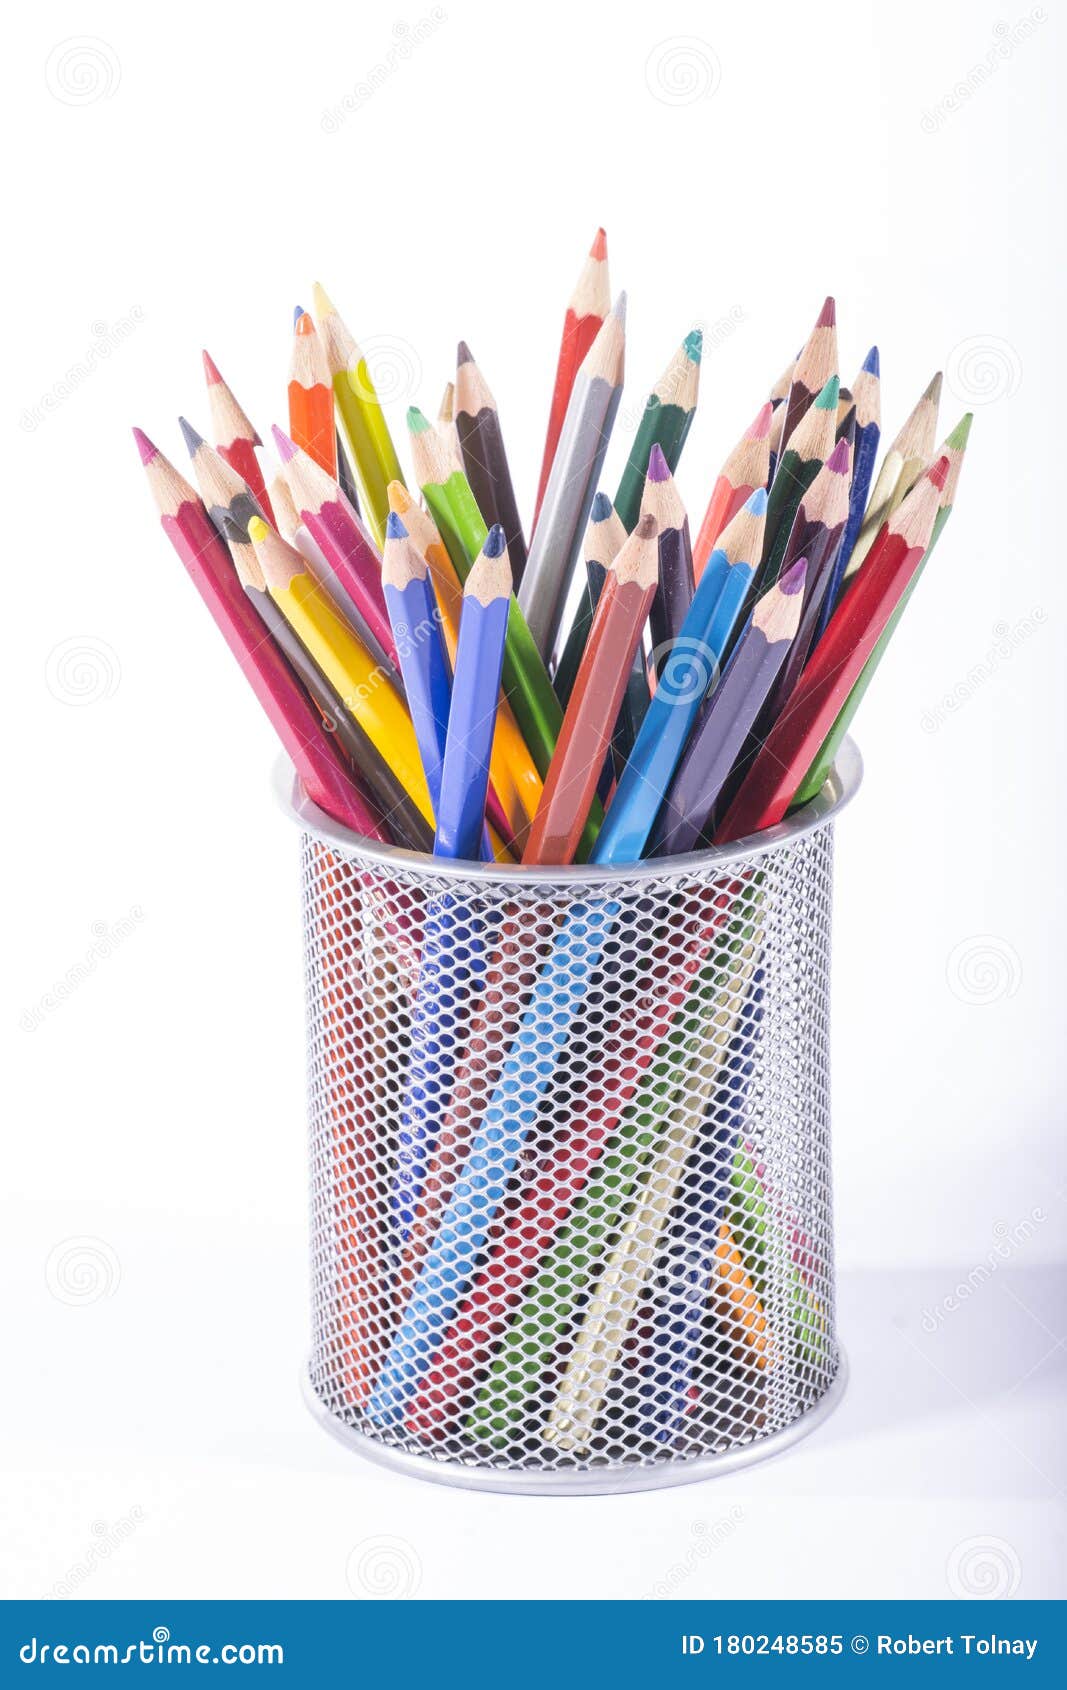 Una fila di matite colorate con una rossa e una blu.